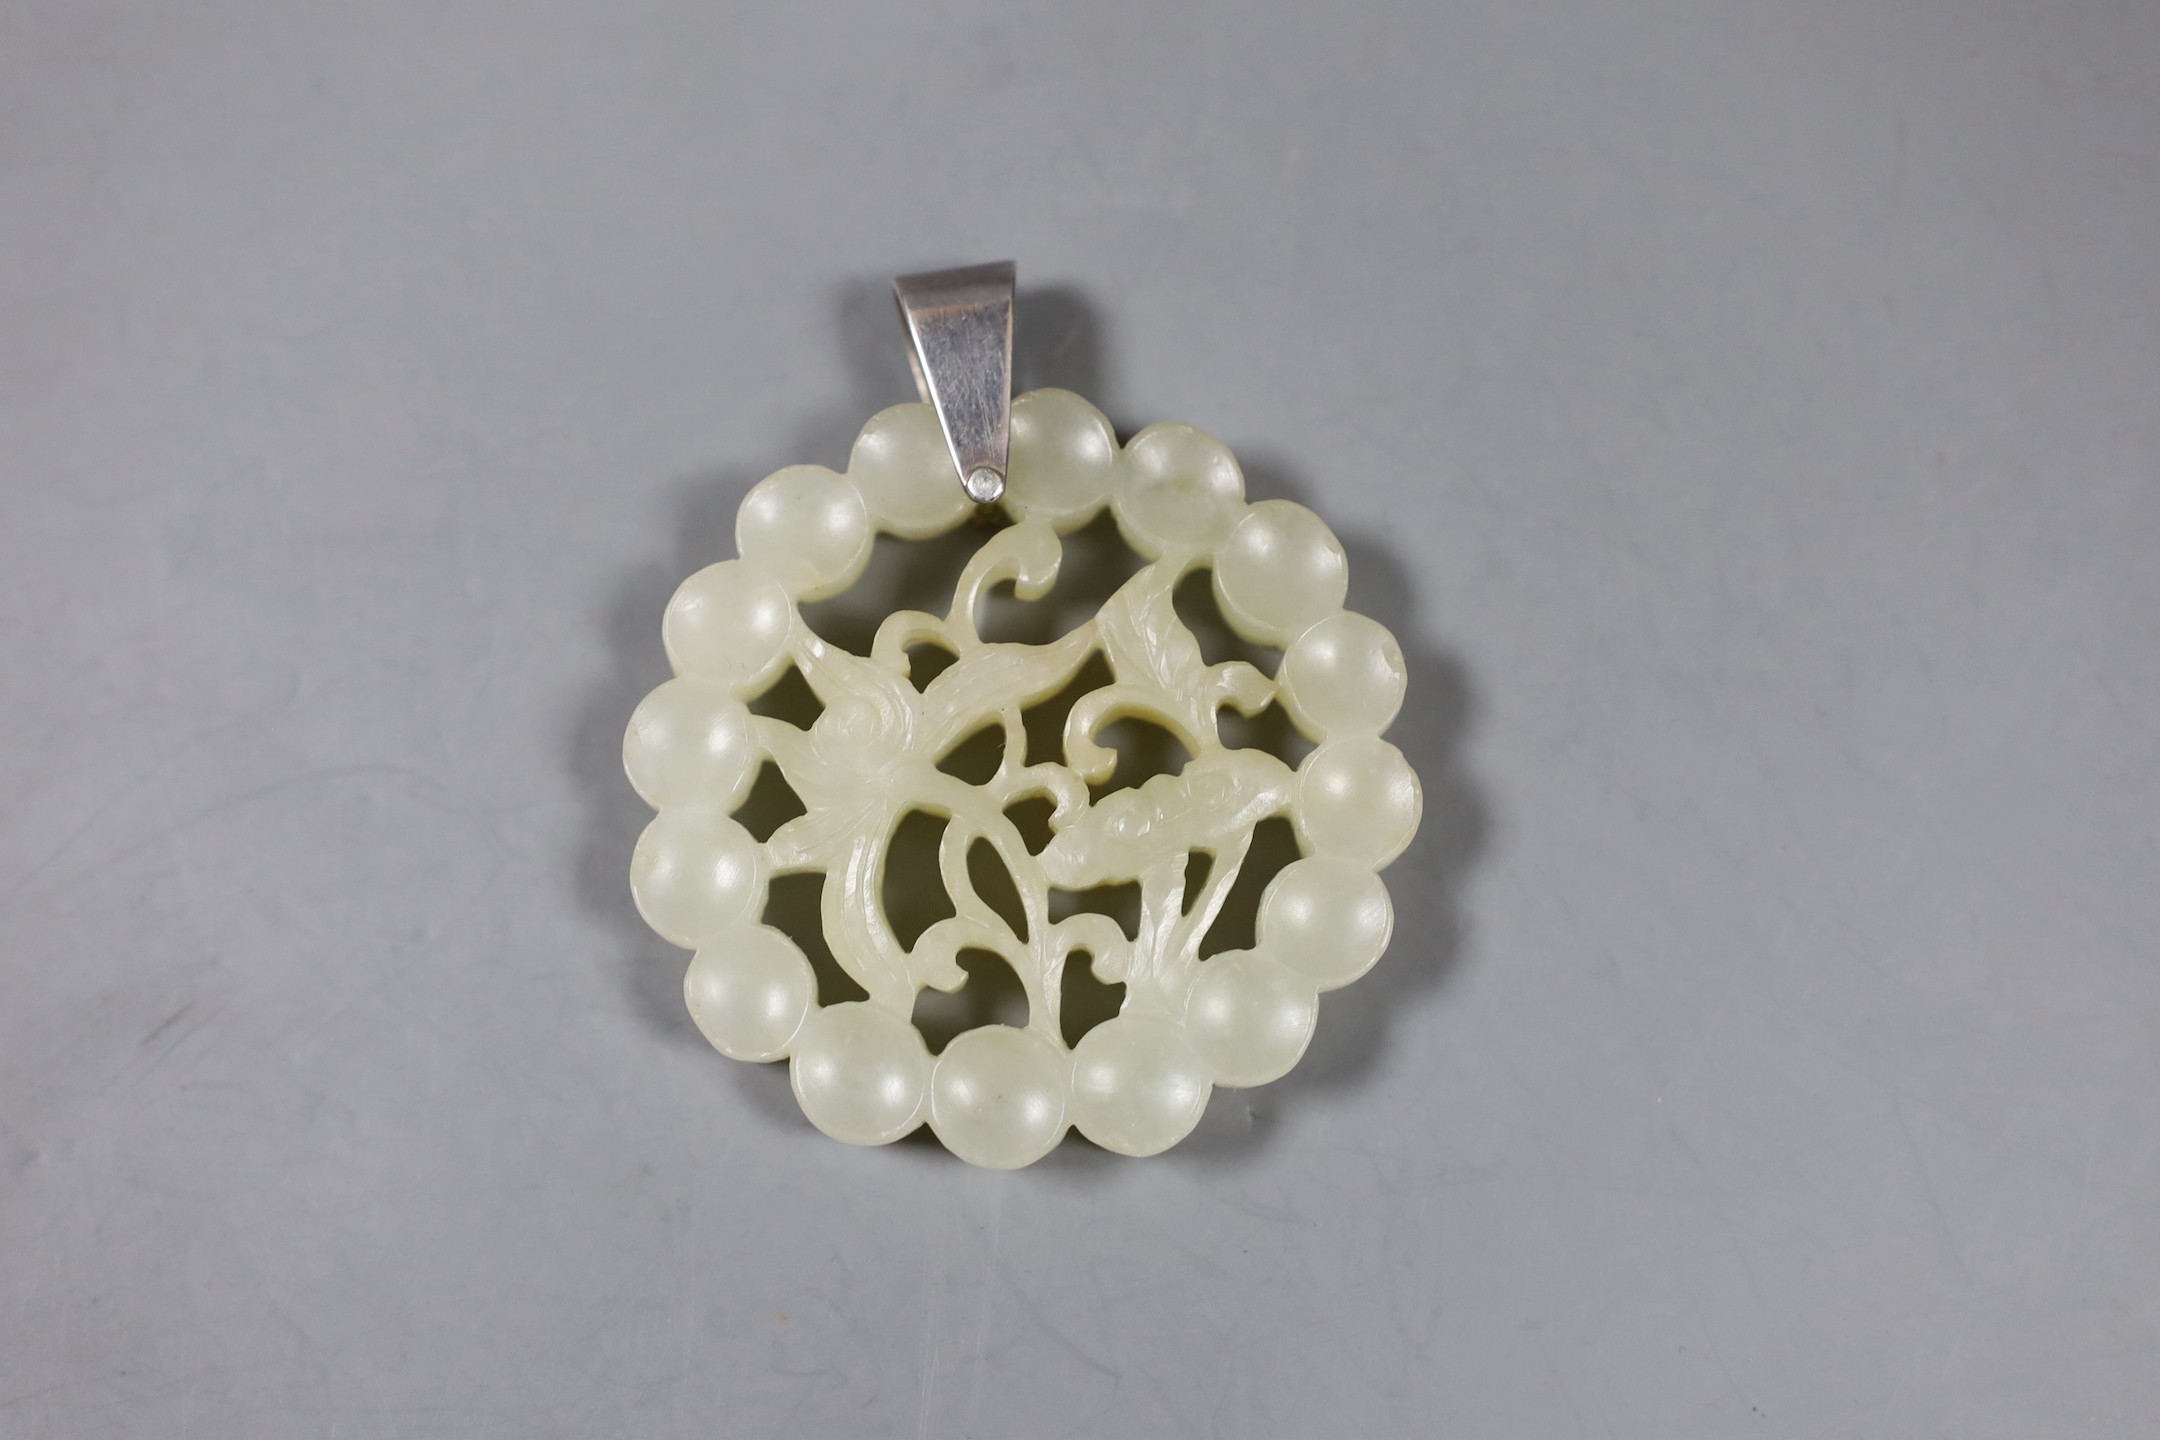 A Chinese carved circular jade pendant. 5.5cm diameter